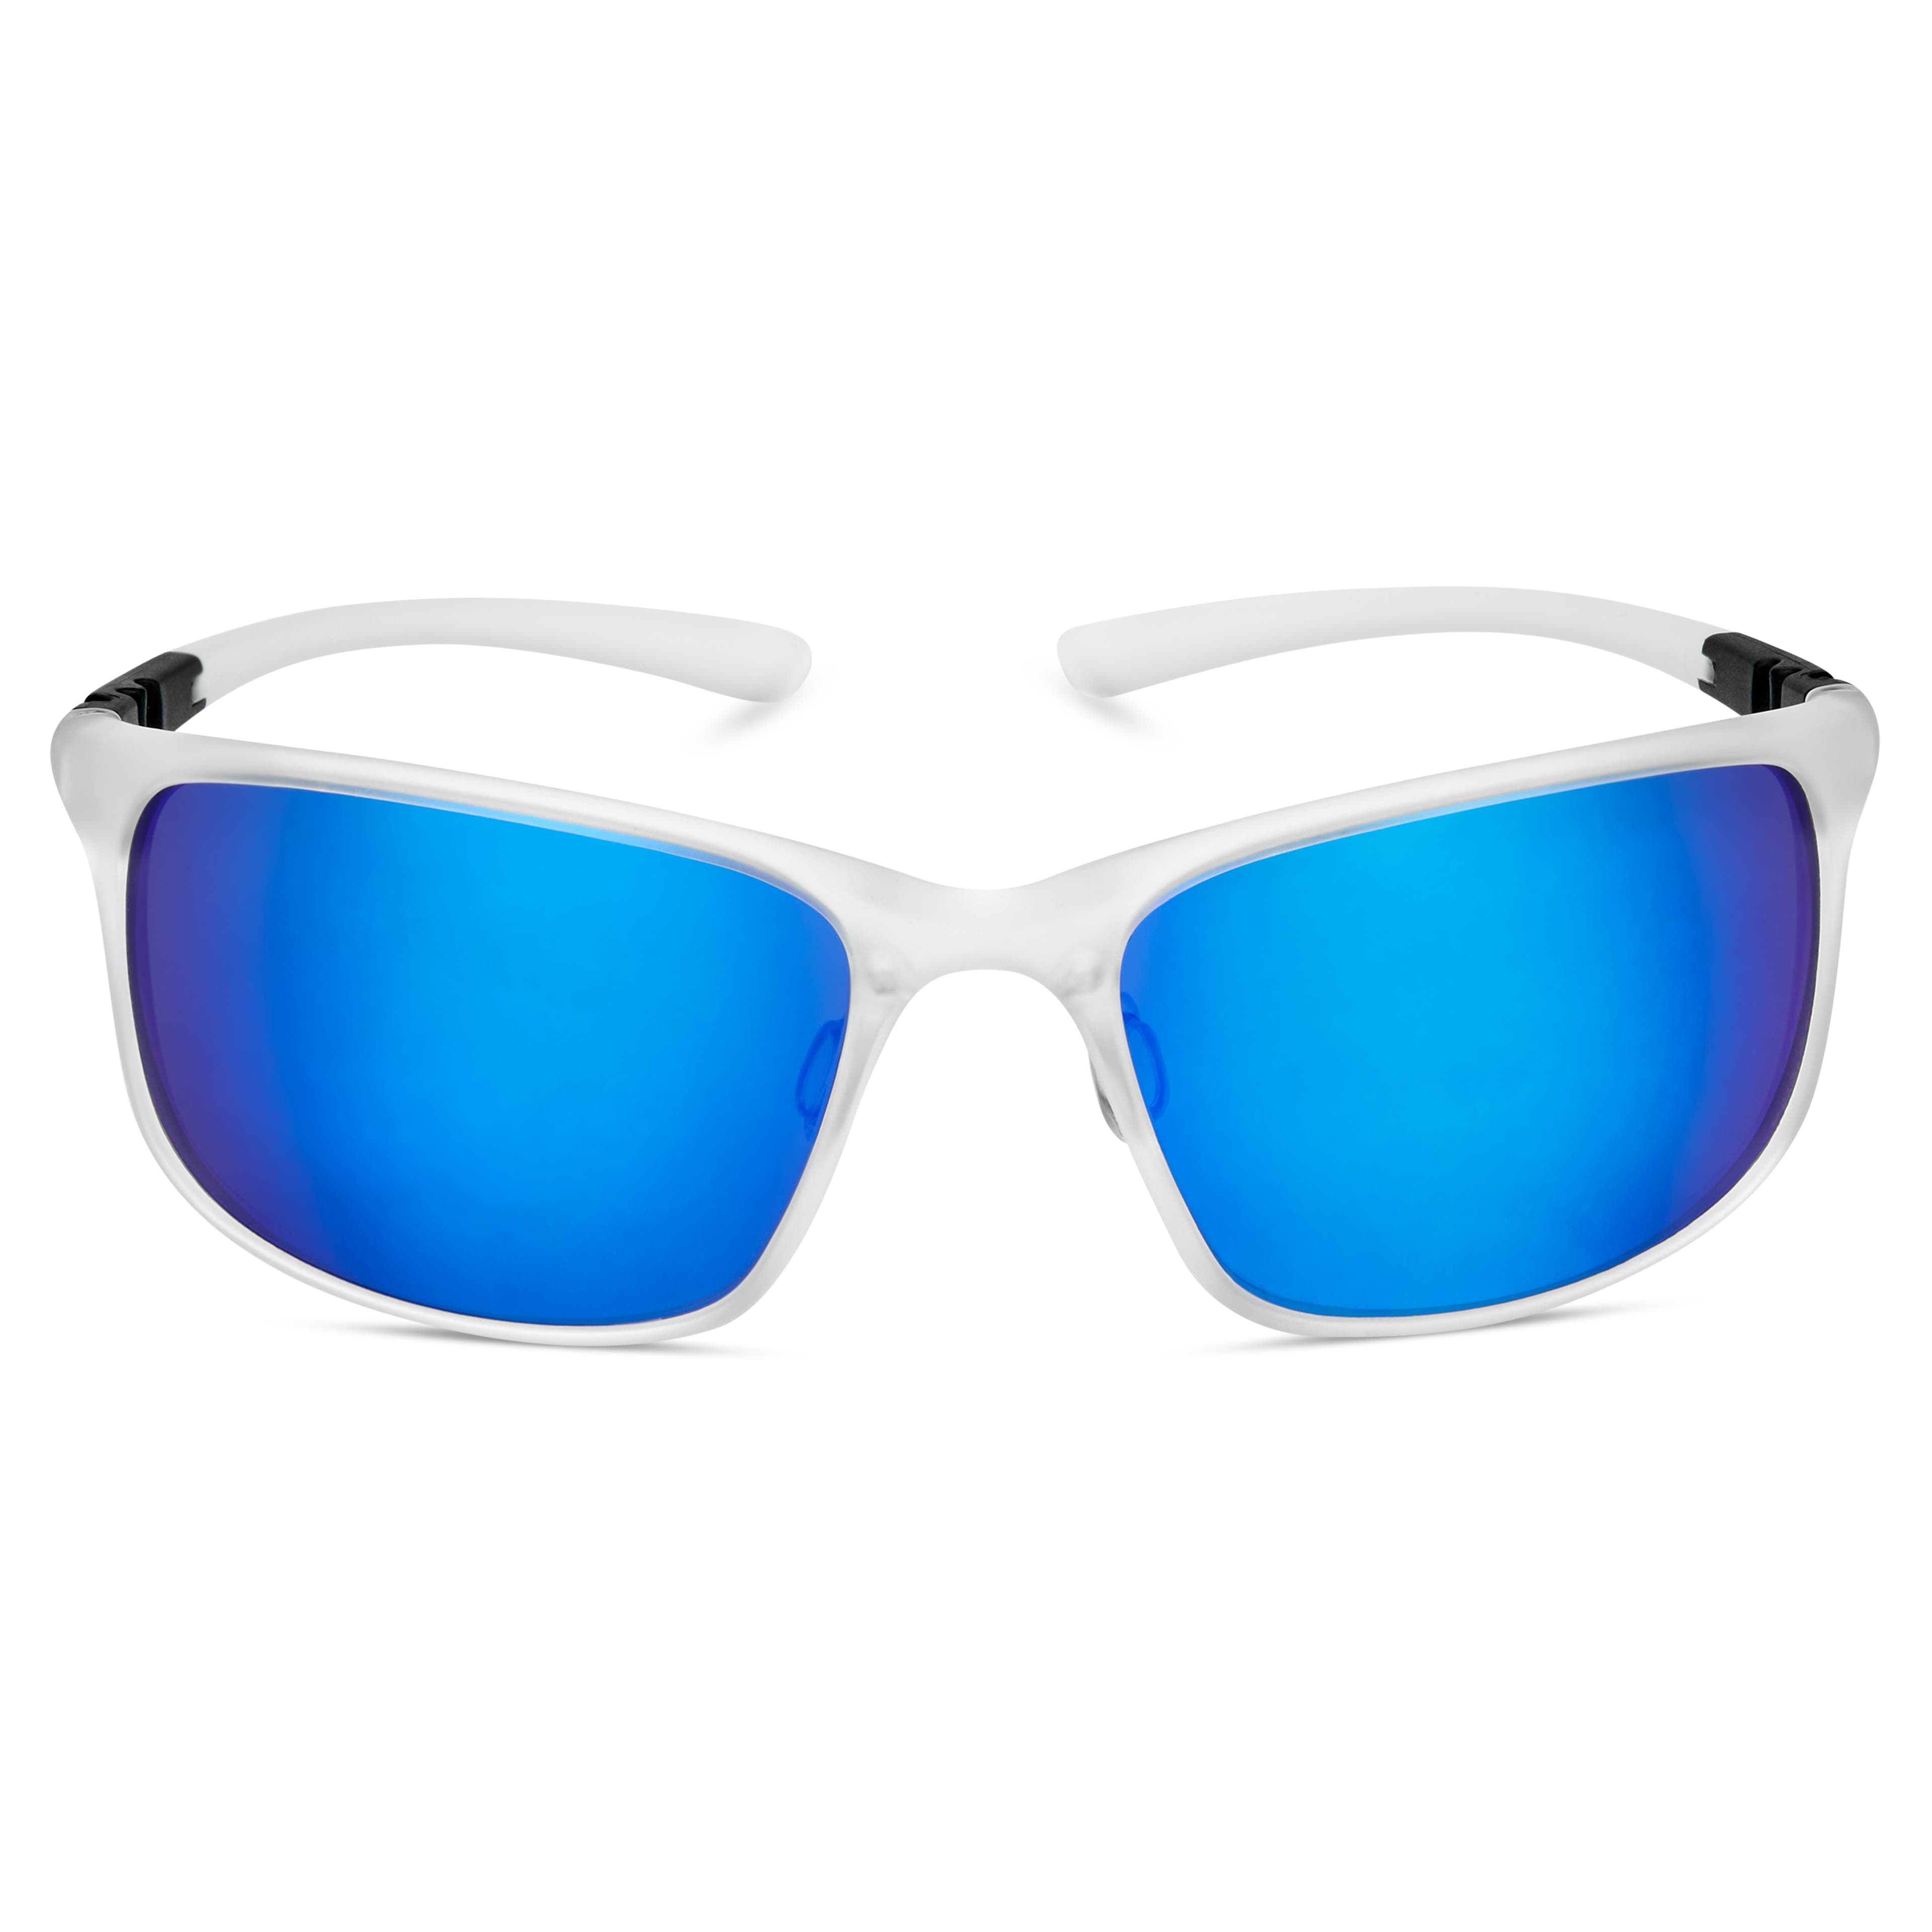 Clear & Blue Sport Sunglasses